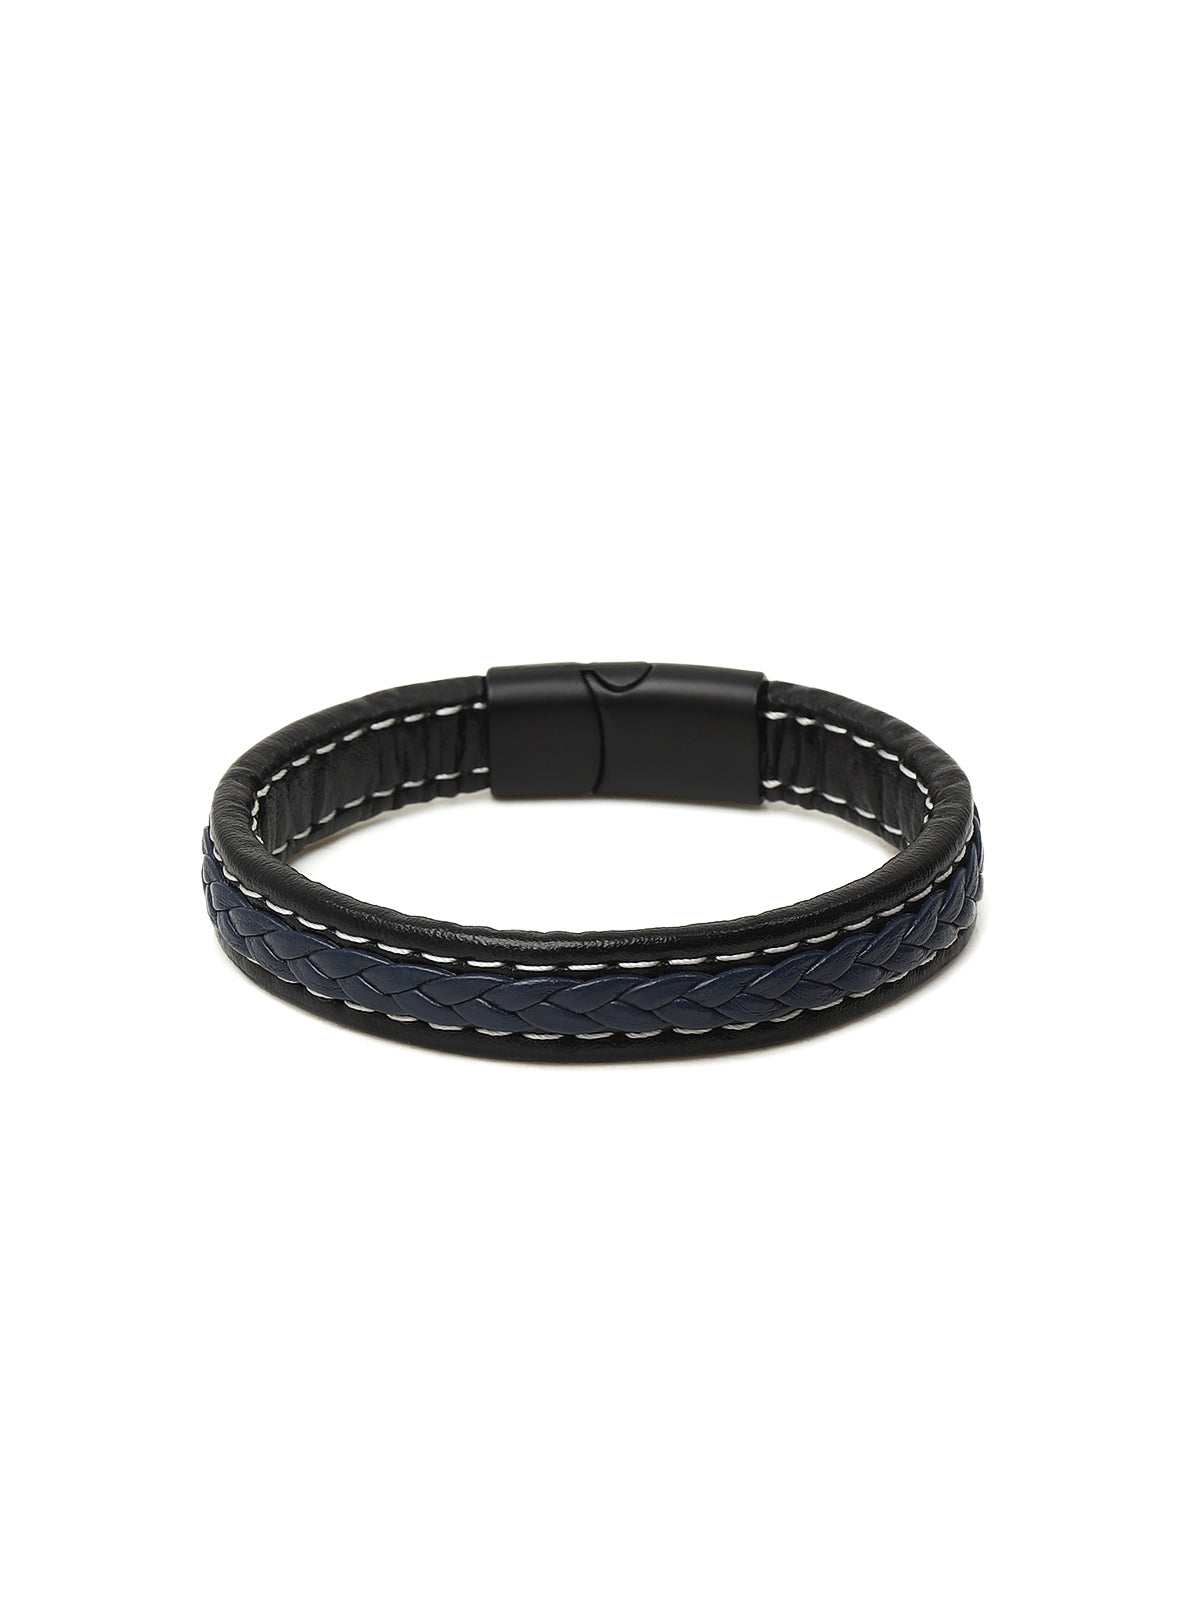 Blue Leather Bracelet - FABR24-018